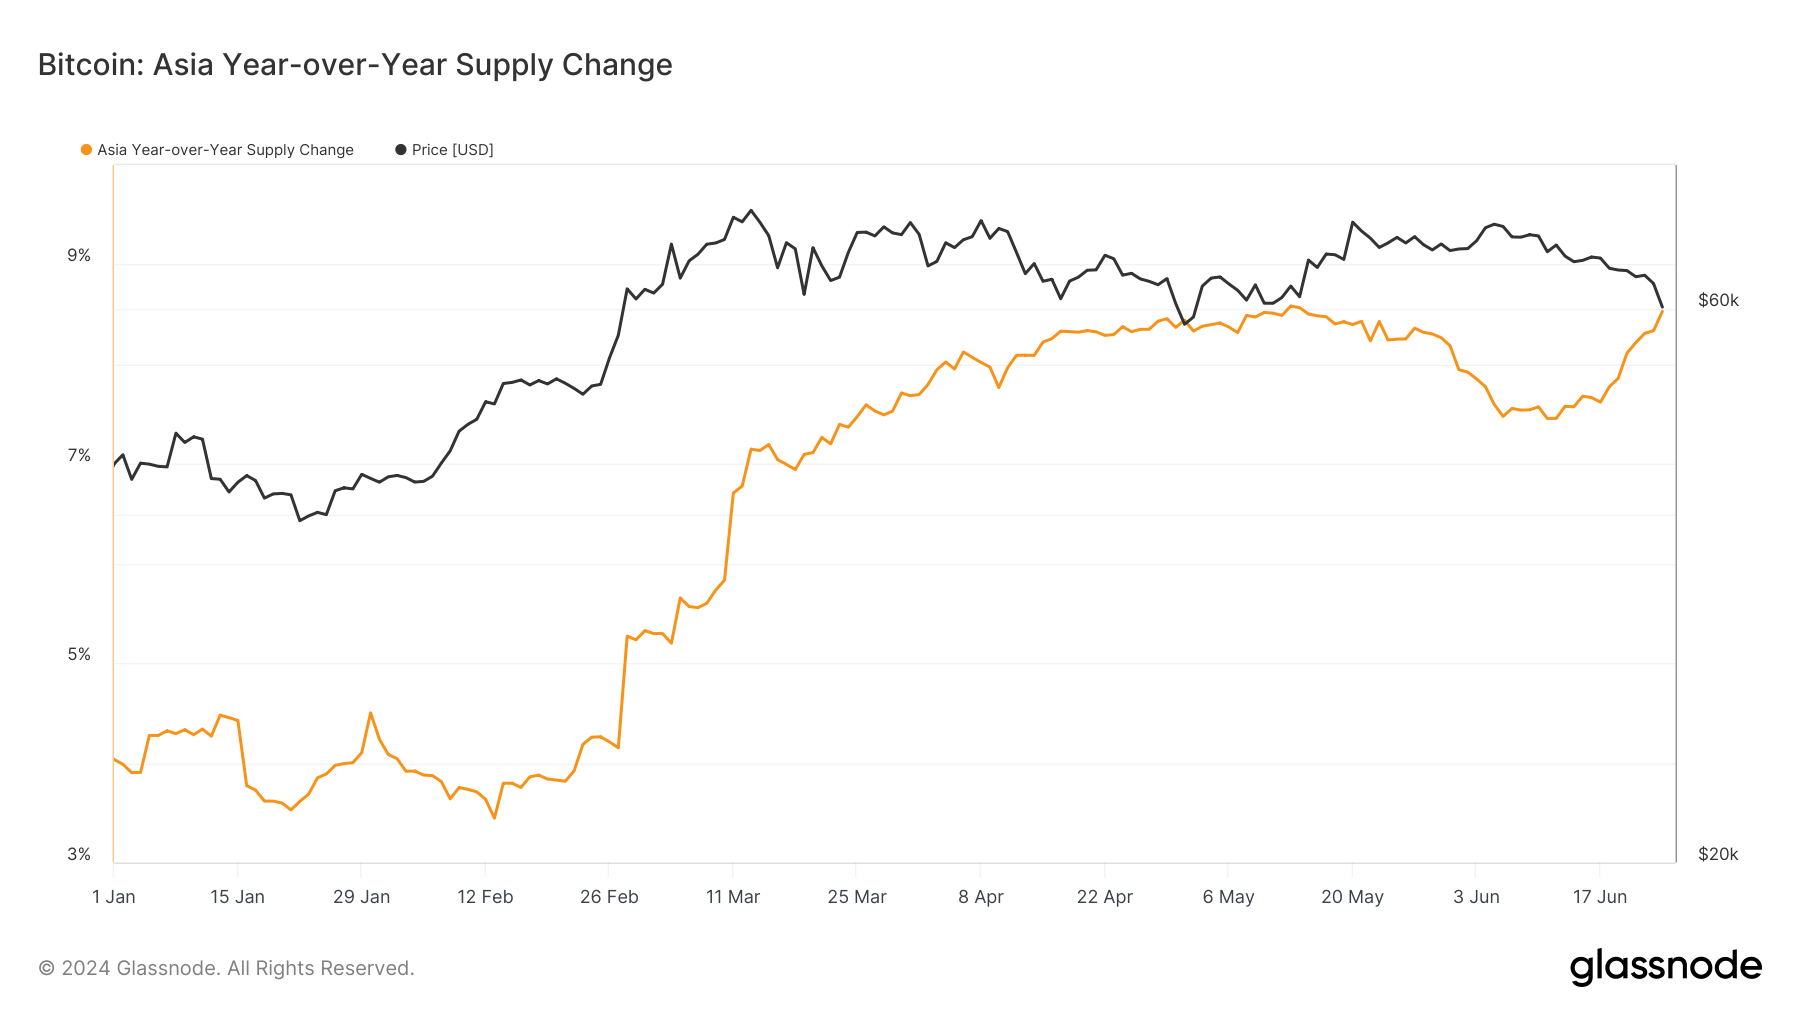 Bitcoin supply in Asia doubles, mirroring 2017 bull run pattern